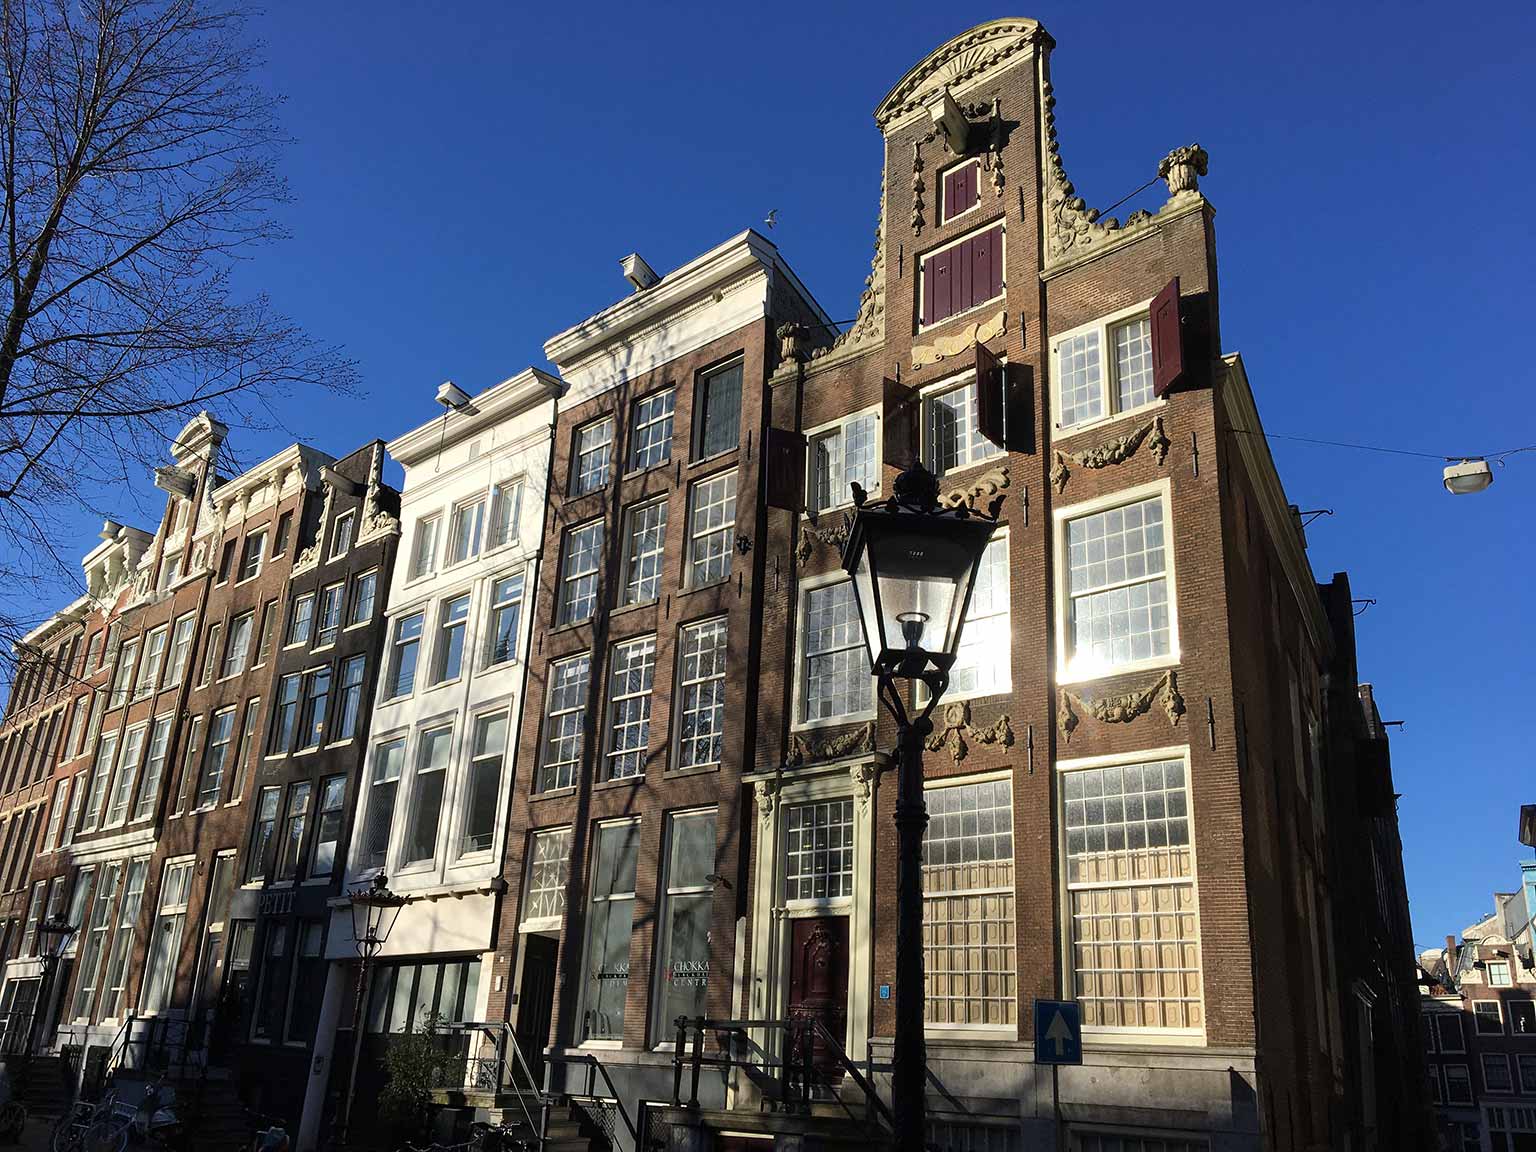 Postzegelmarkt, Amsterdam, on the right number 264 at the corner of Wijdesteeg